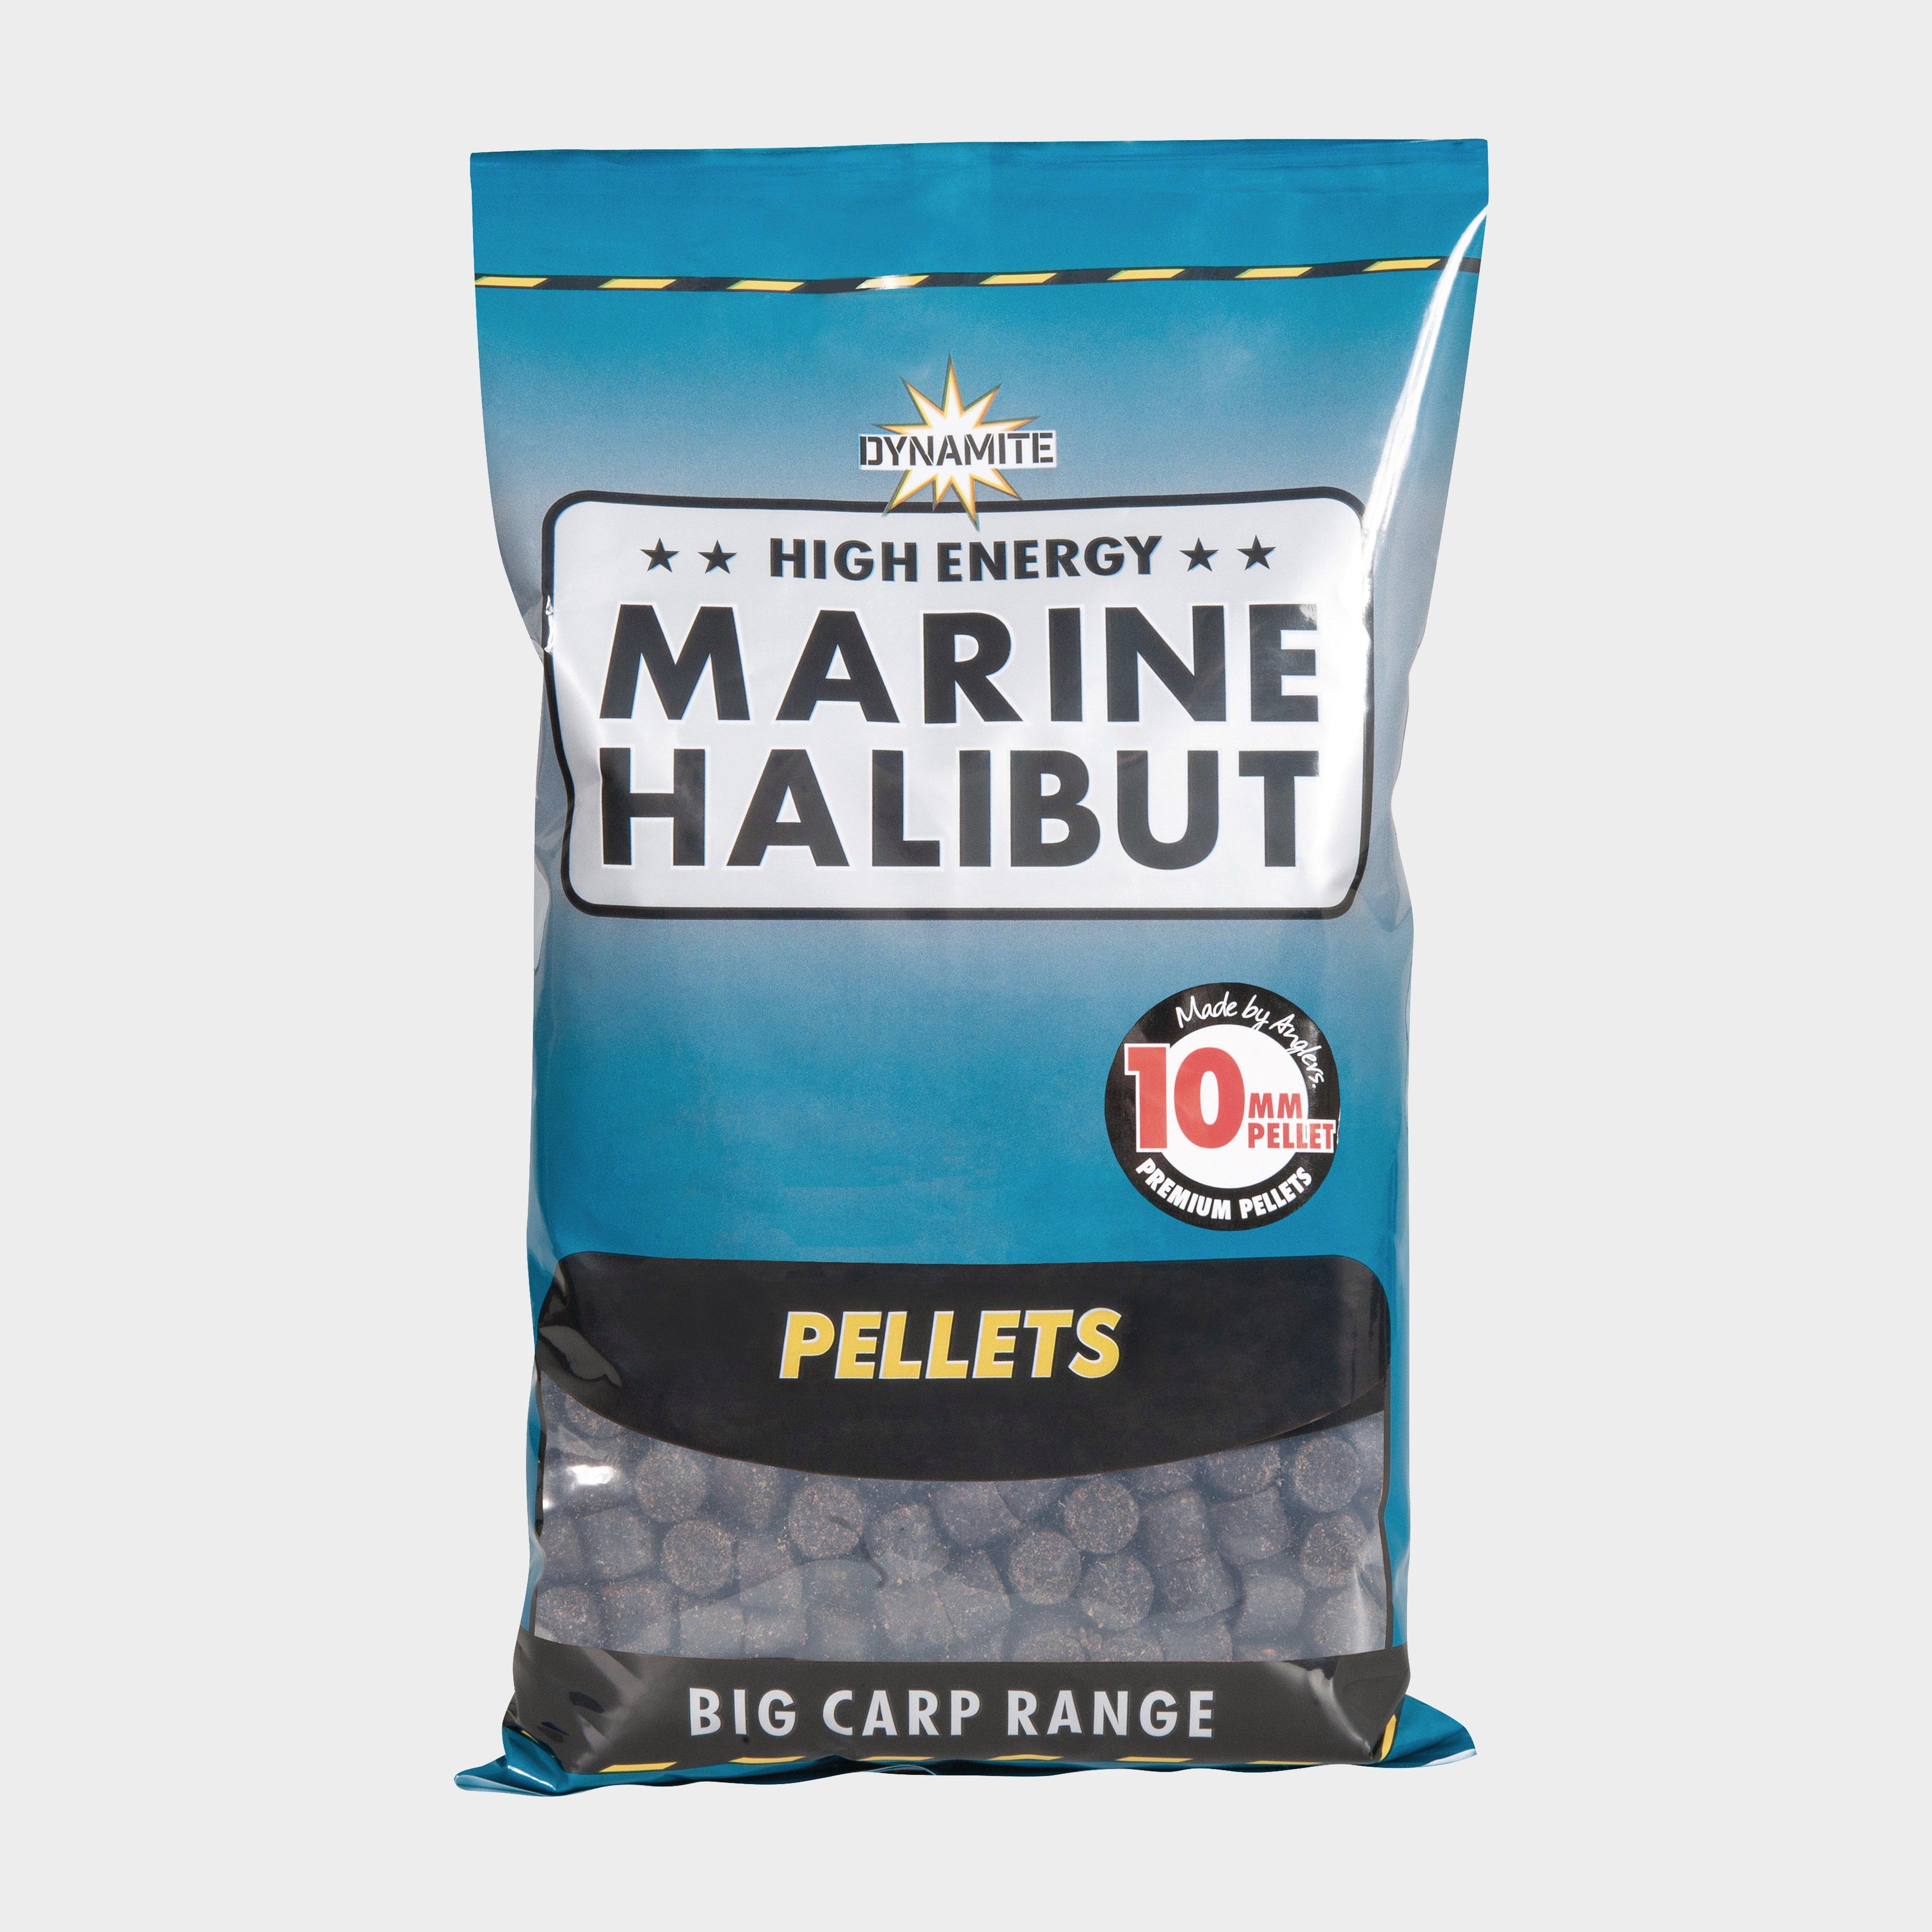 Ocean Amino - What's in our Carp Fishing Boilies? – Premium Carp Fishing